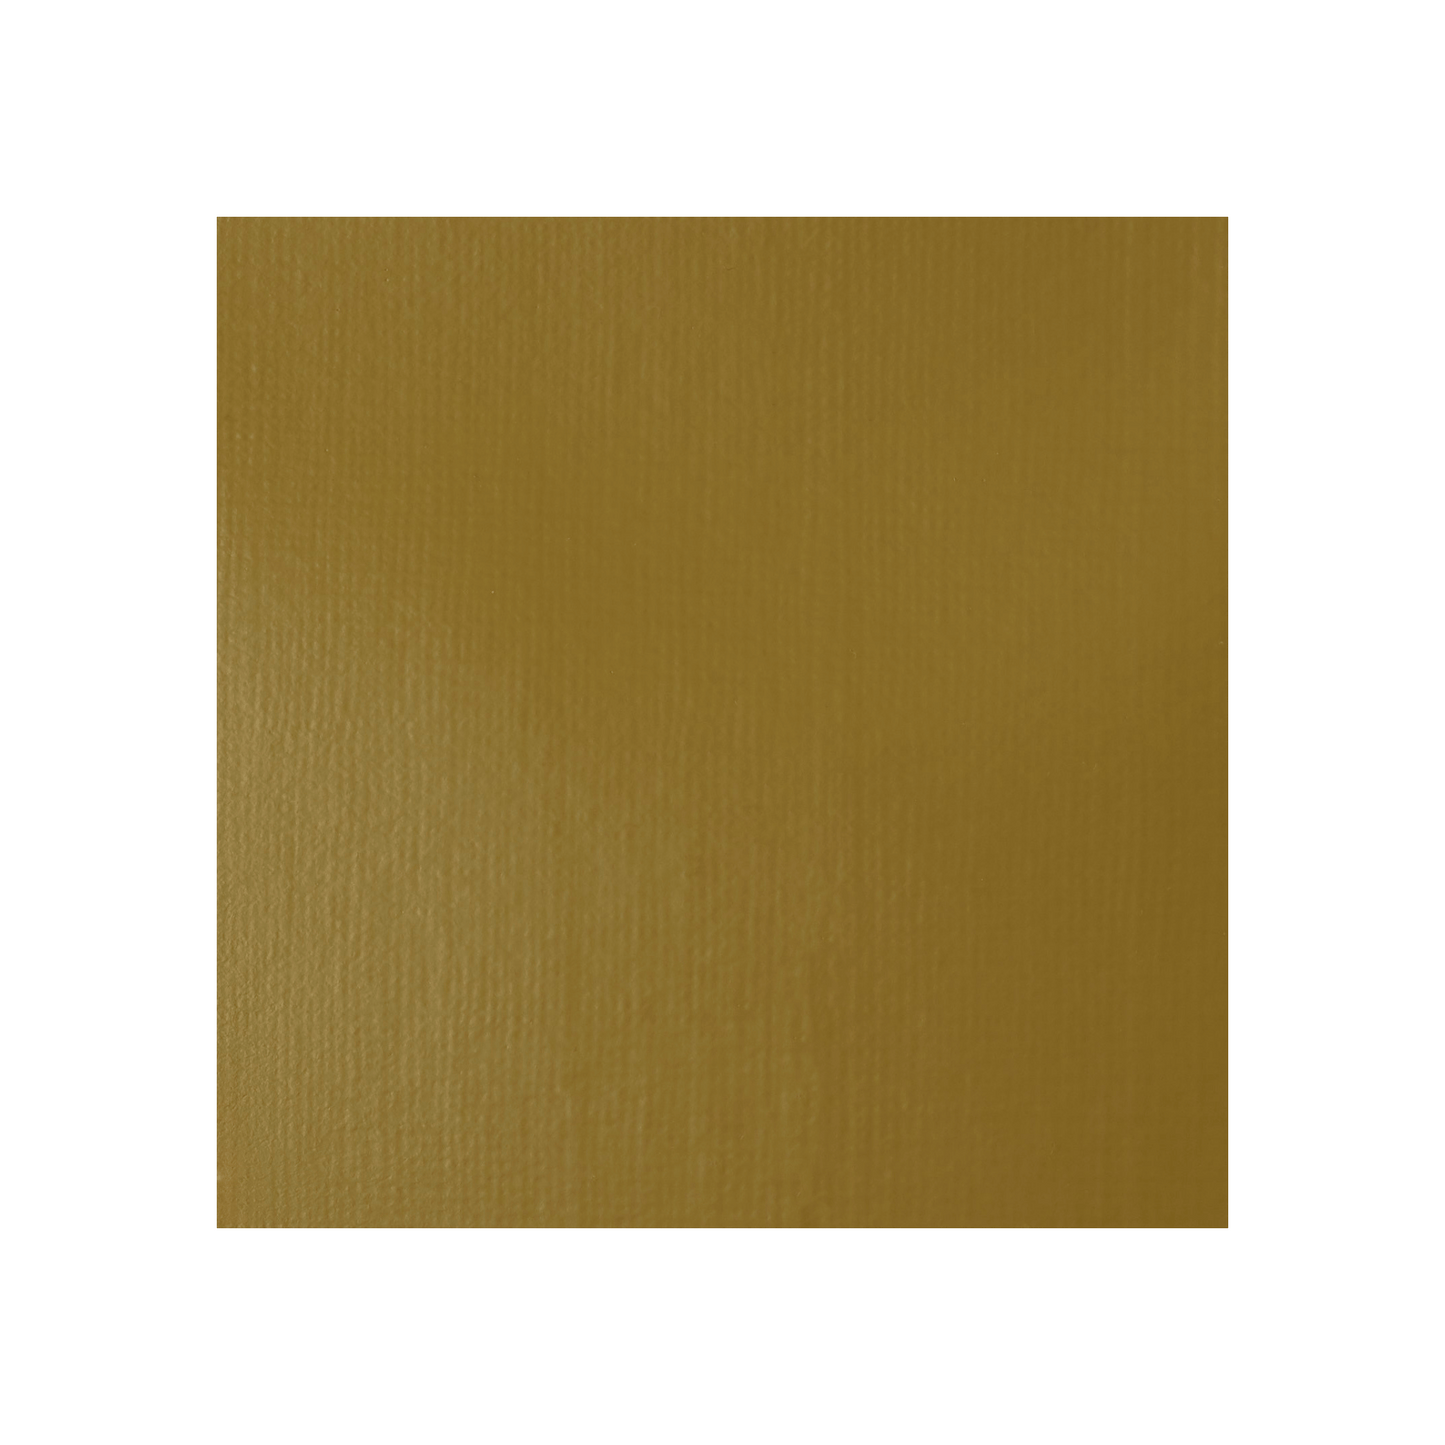 Bronze yellow colour swatch for Liquitex Professional Heavy Body Acrylic